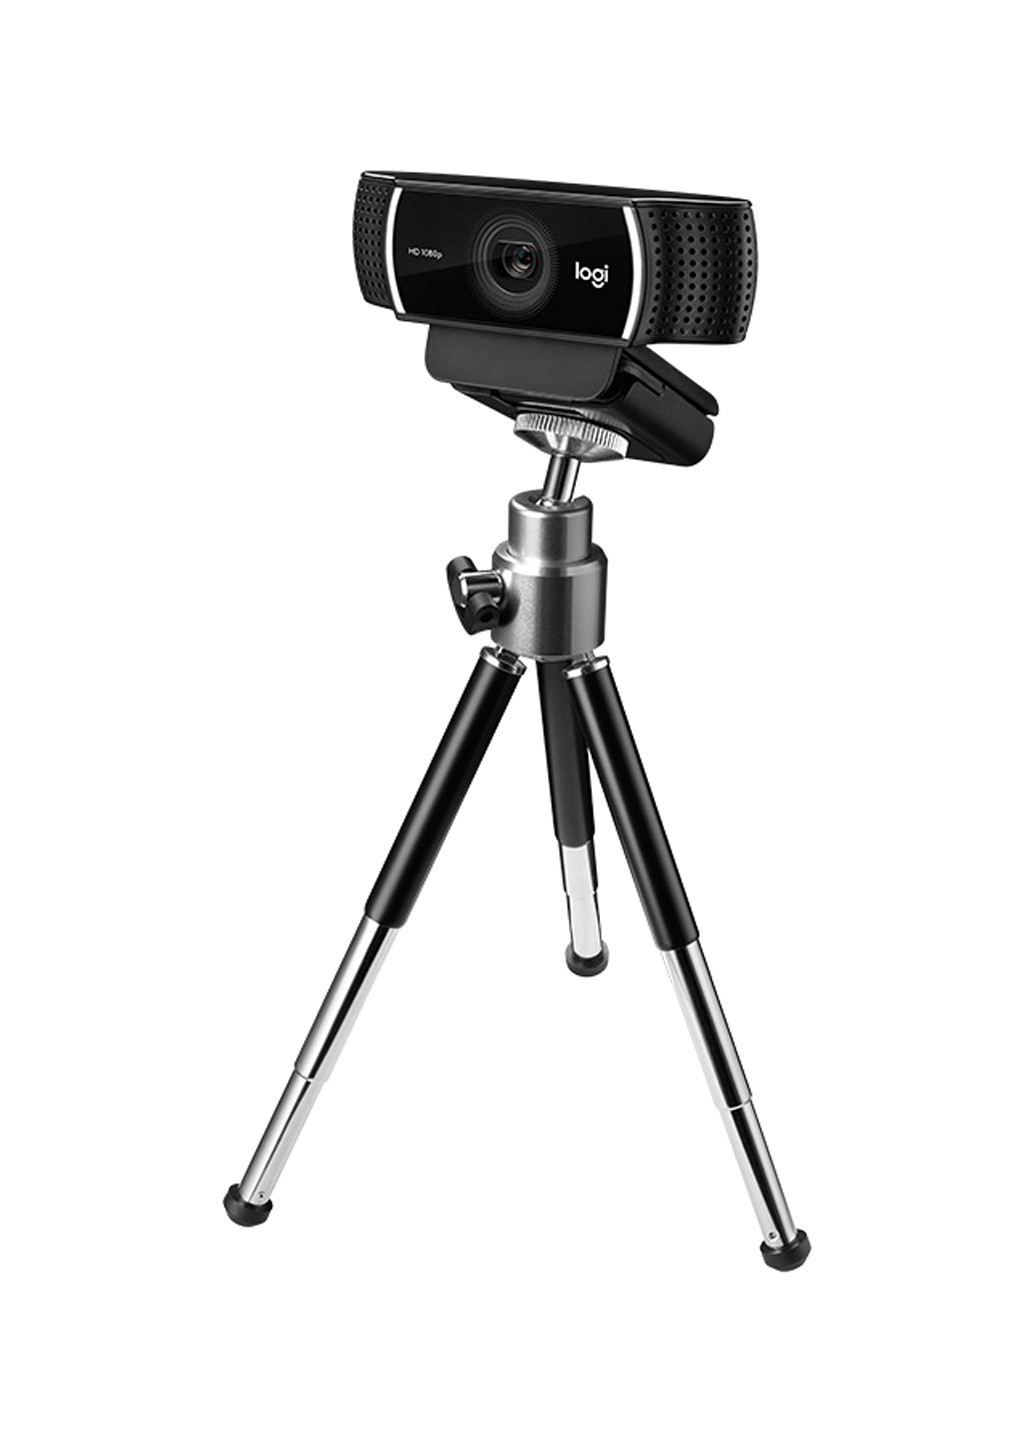 Веб-камера Webcam C922 Pro Stream Webcam - EMEA (V5L960001088) Logitech webcam c922 pro stream webcam - emea (v5l960001088) (l960-001088) (135463231)